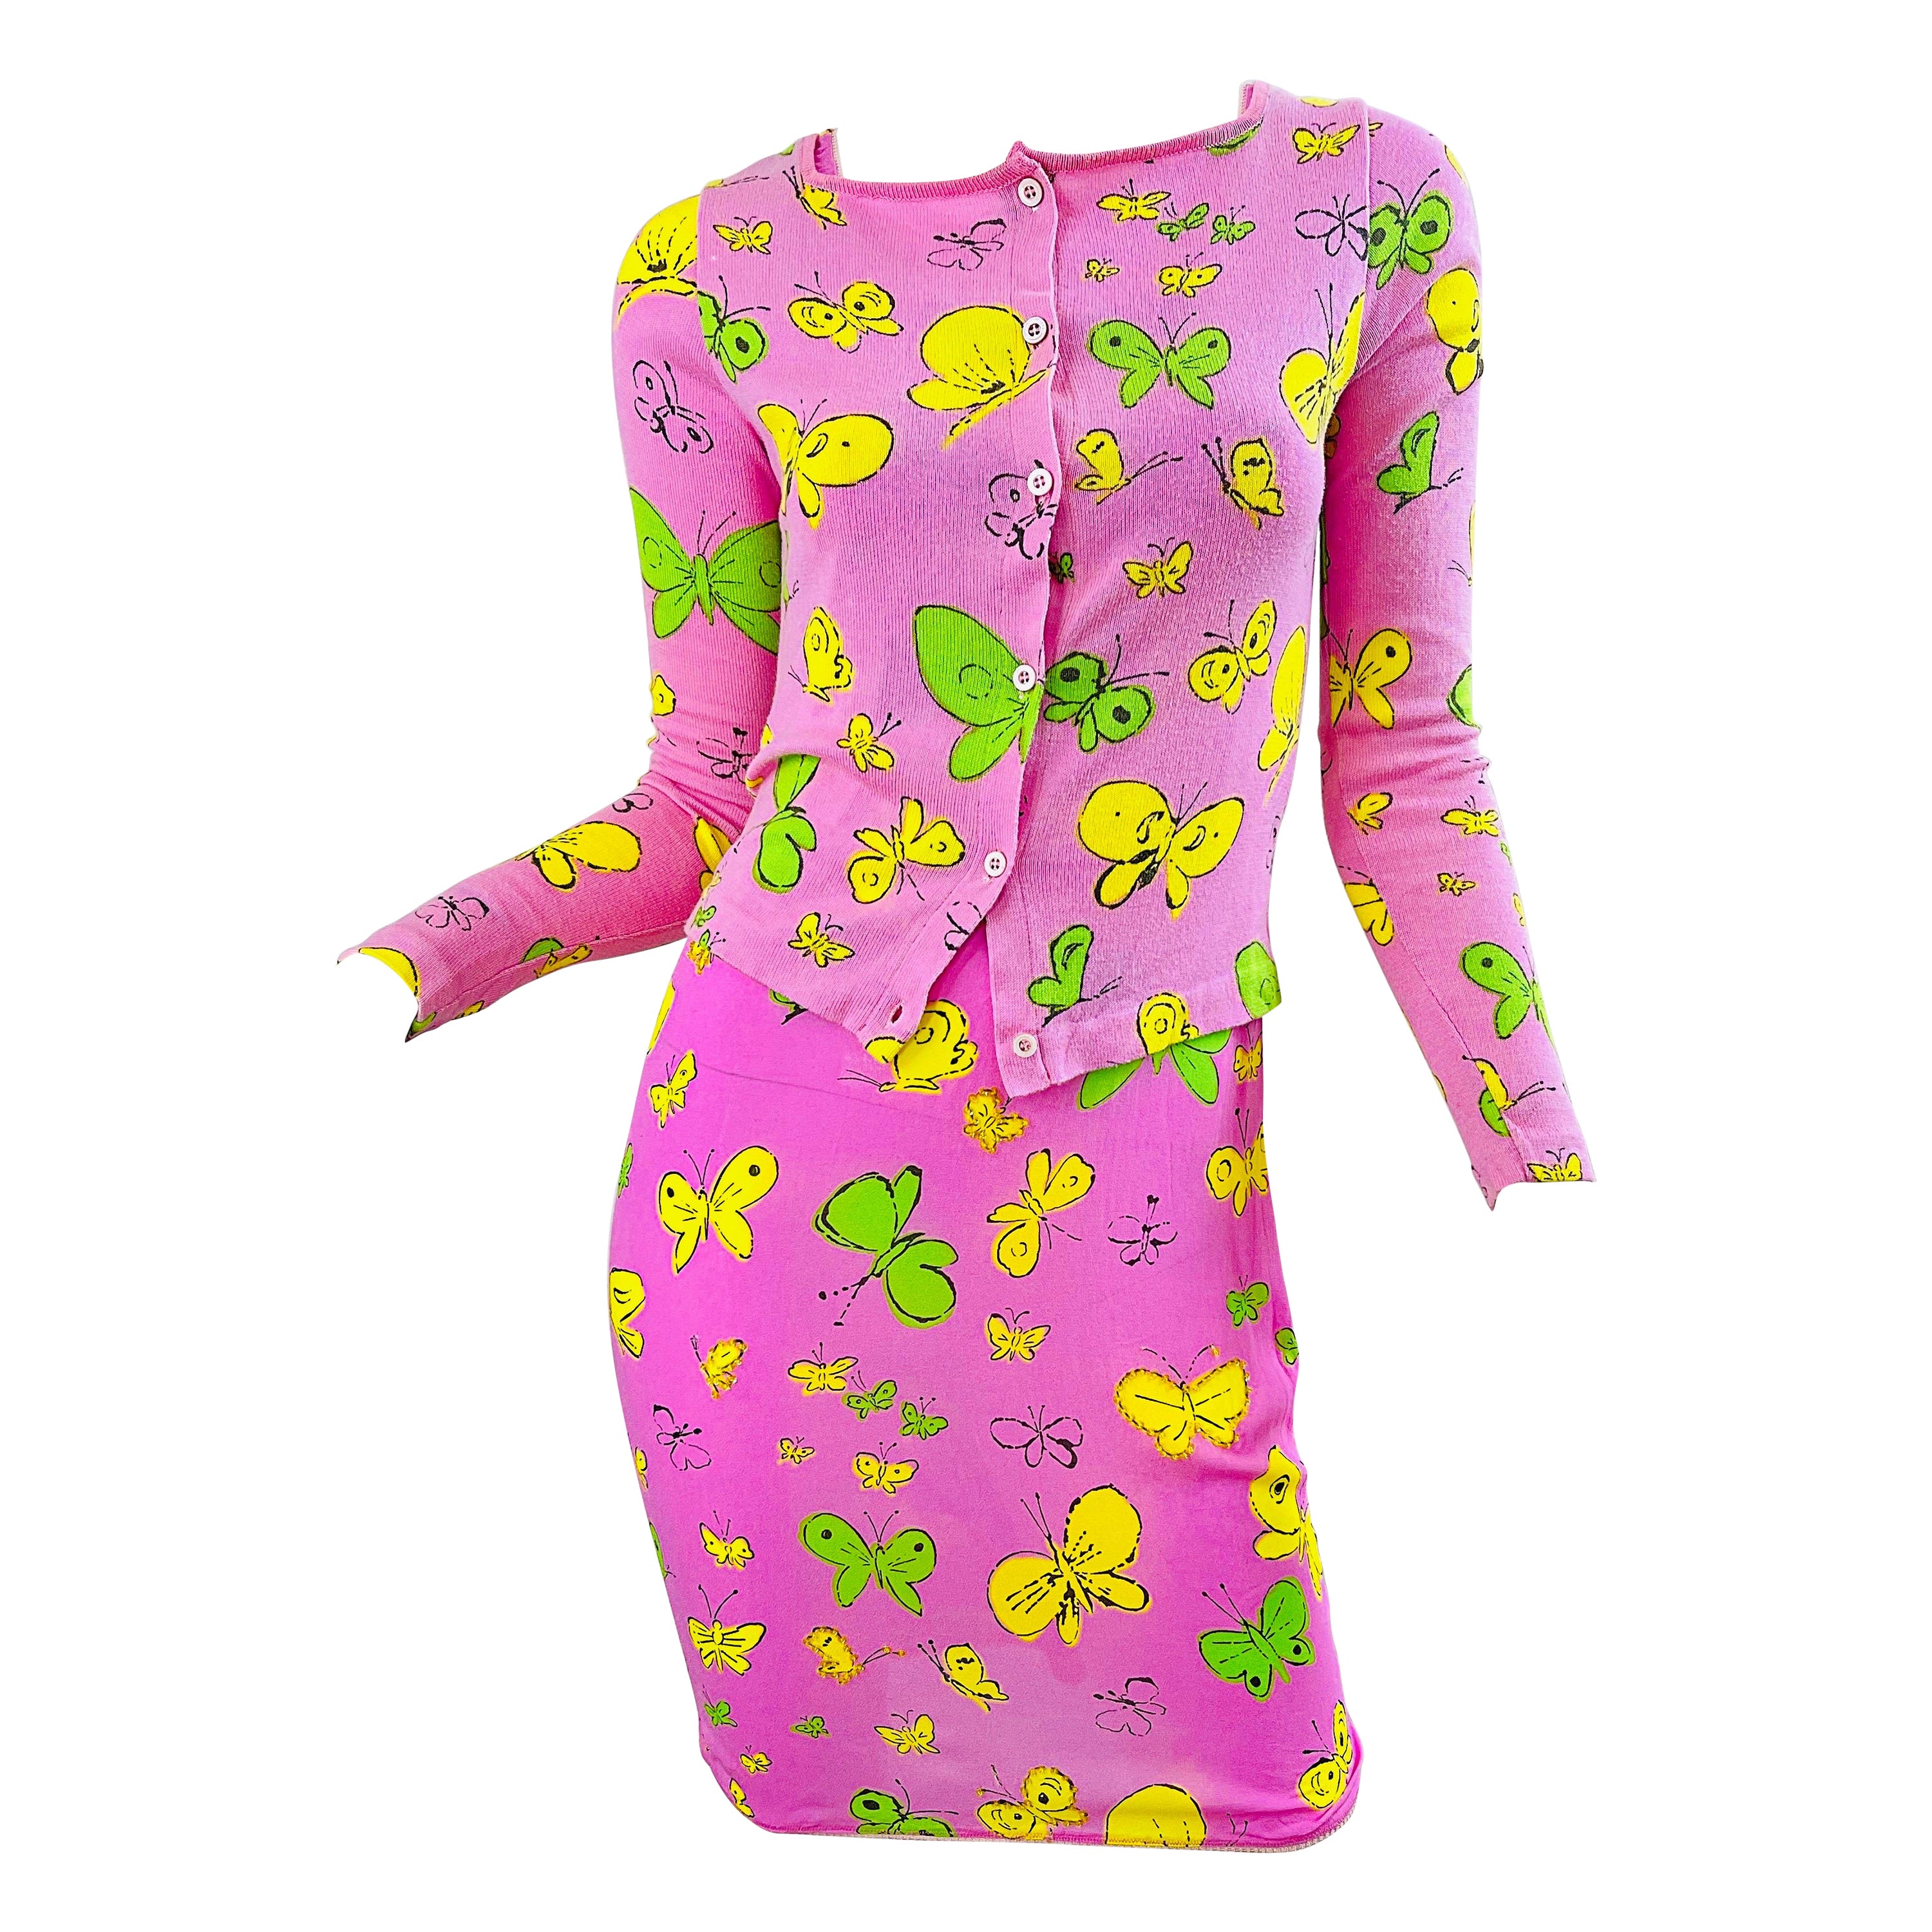 BARBIE 1990s Versus Gianni Versace Bubblegum Pink Beads Butterfly Dress Cardigan For Sale